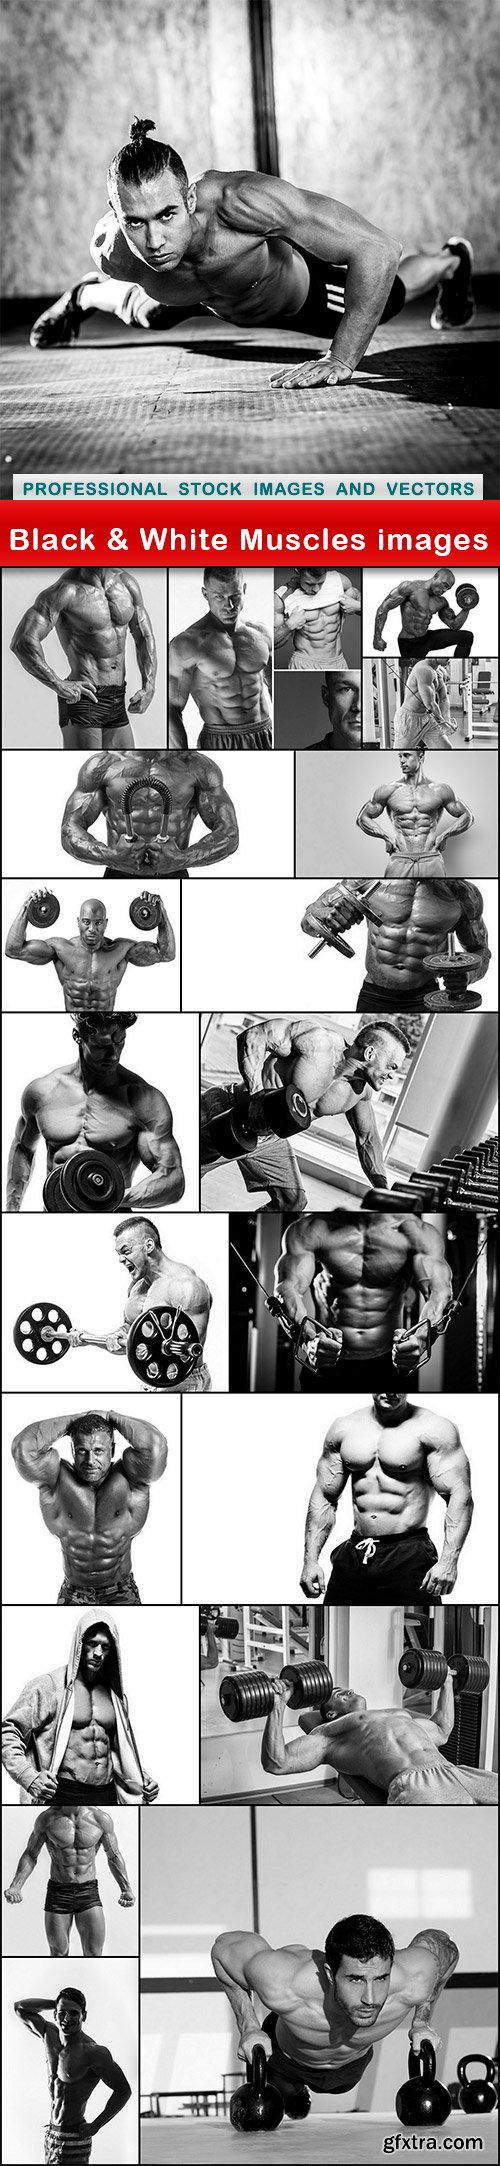 Black & White Muscles images - 20 UHQ JPEG